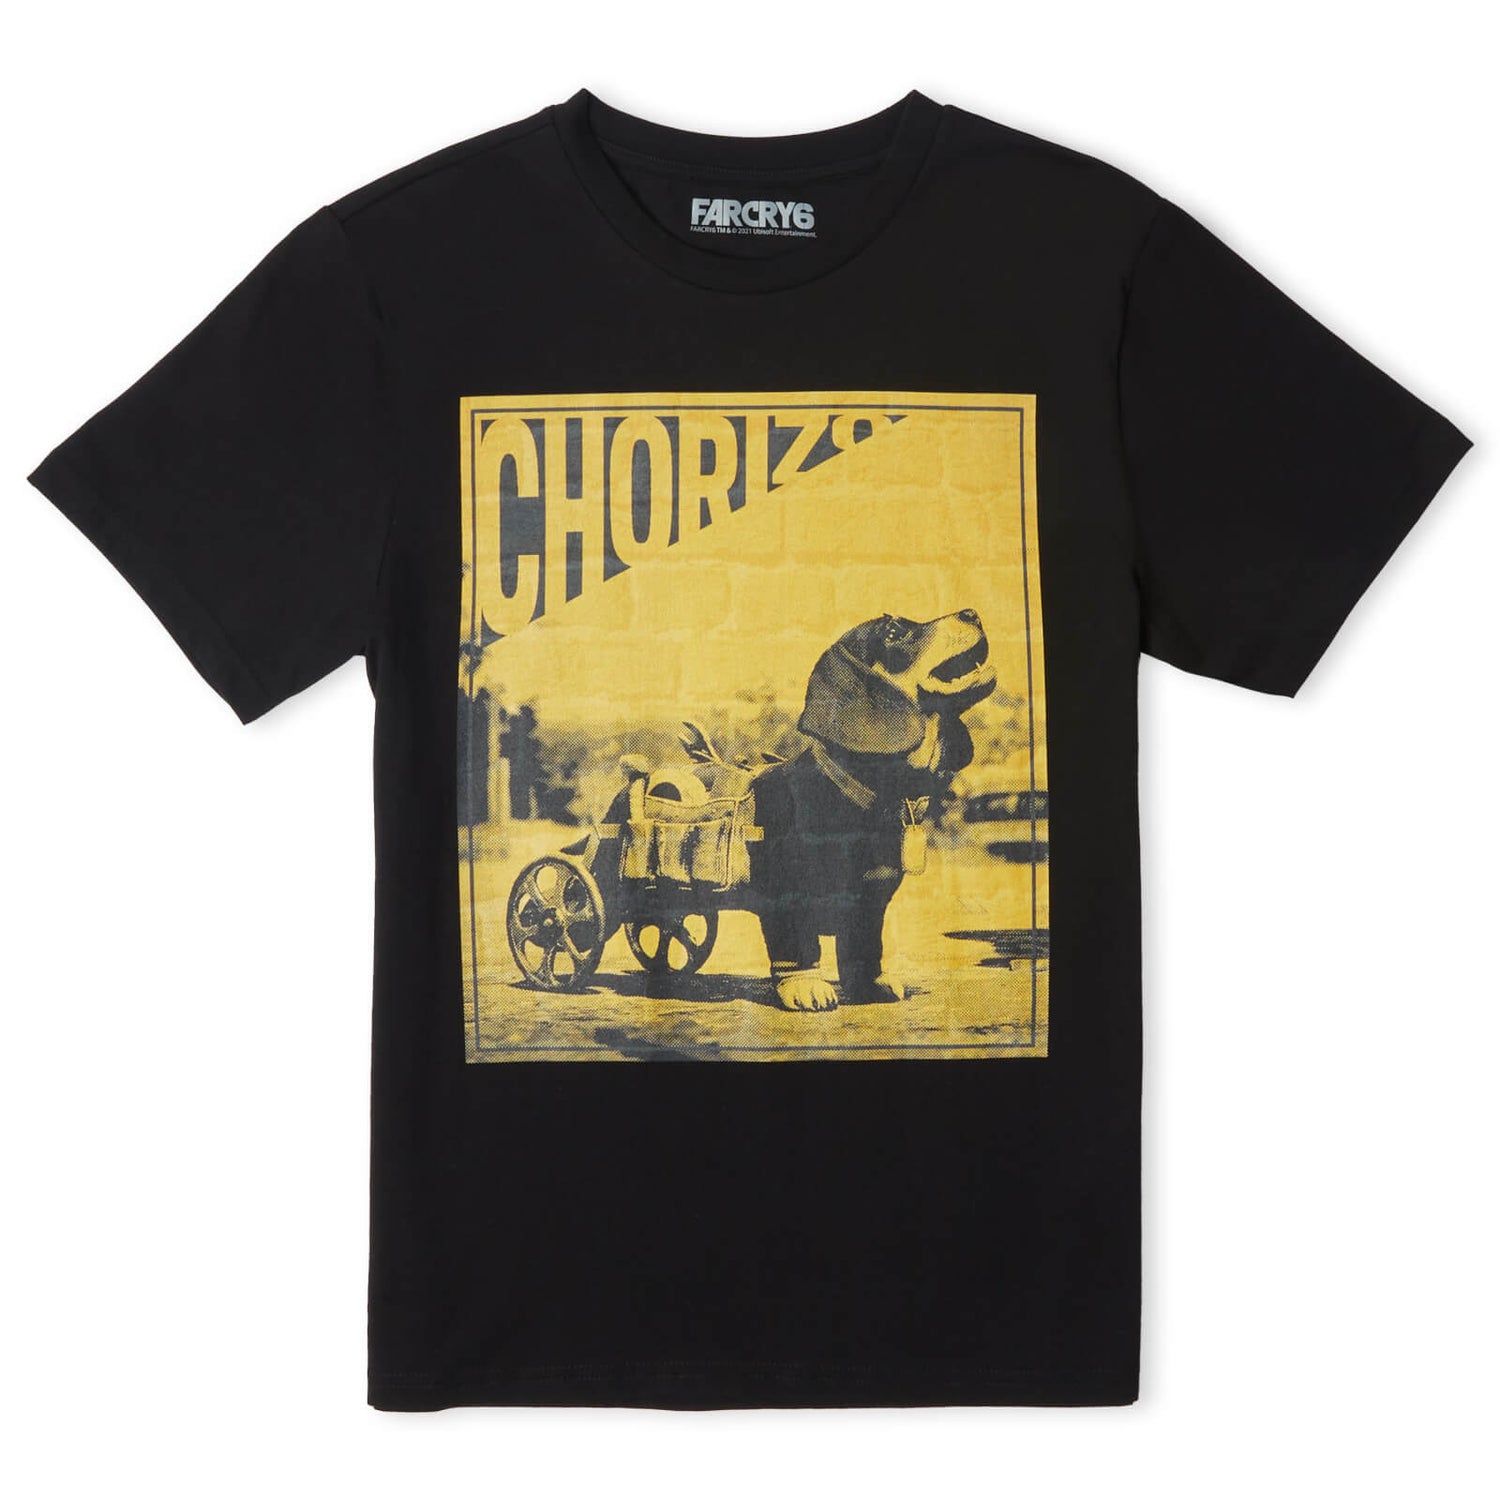 Far Cry 6 Chorizo Poster Women's T-Shirt - Black